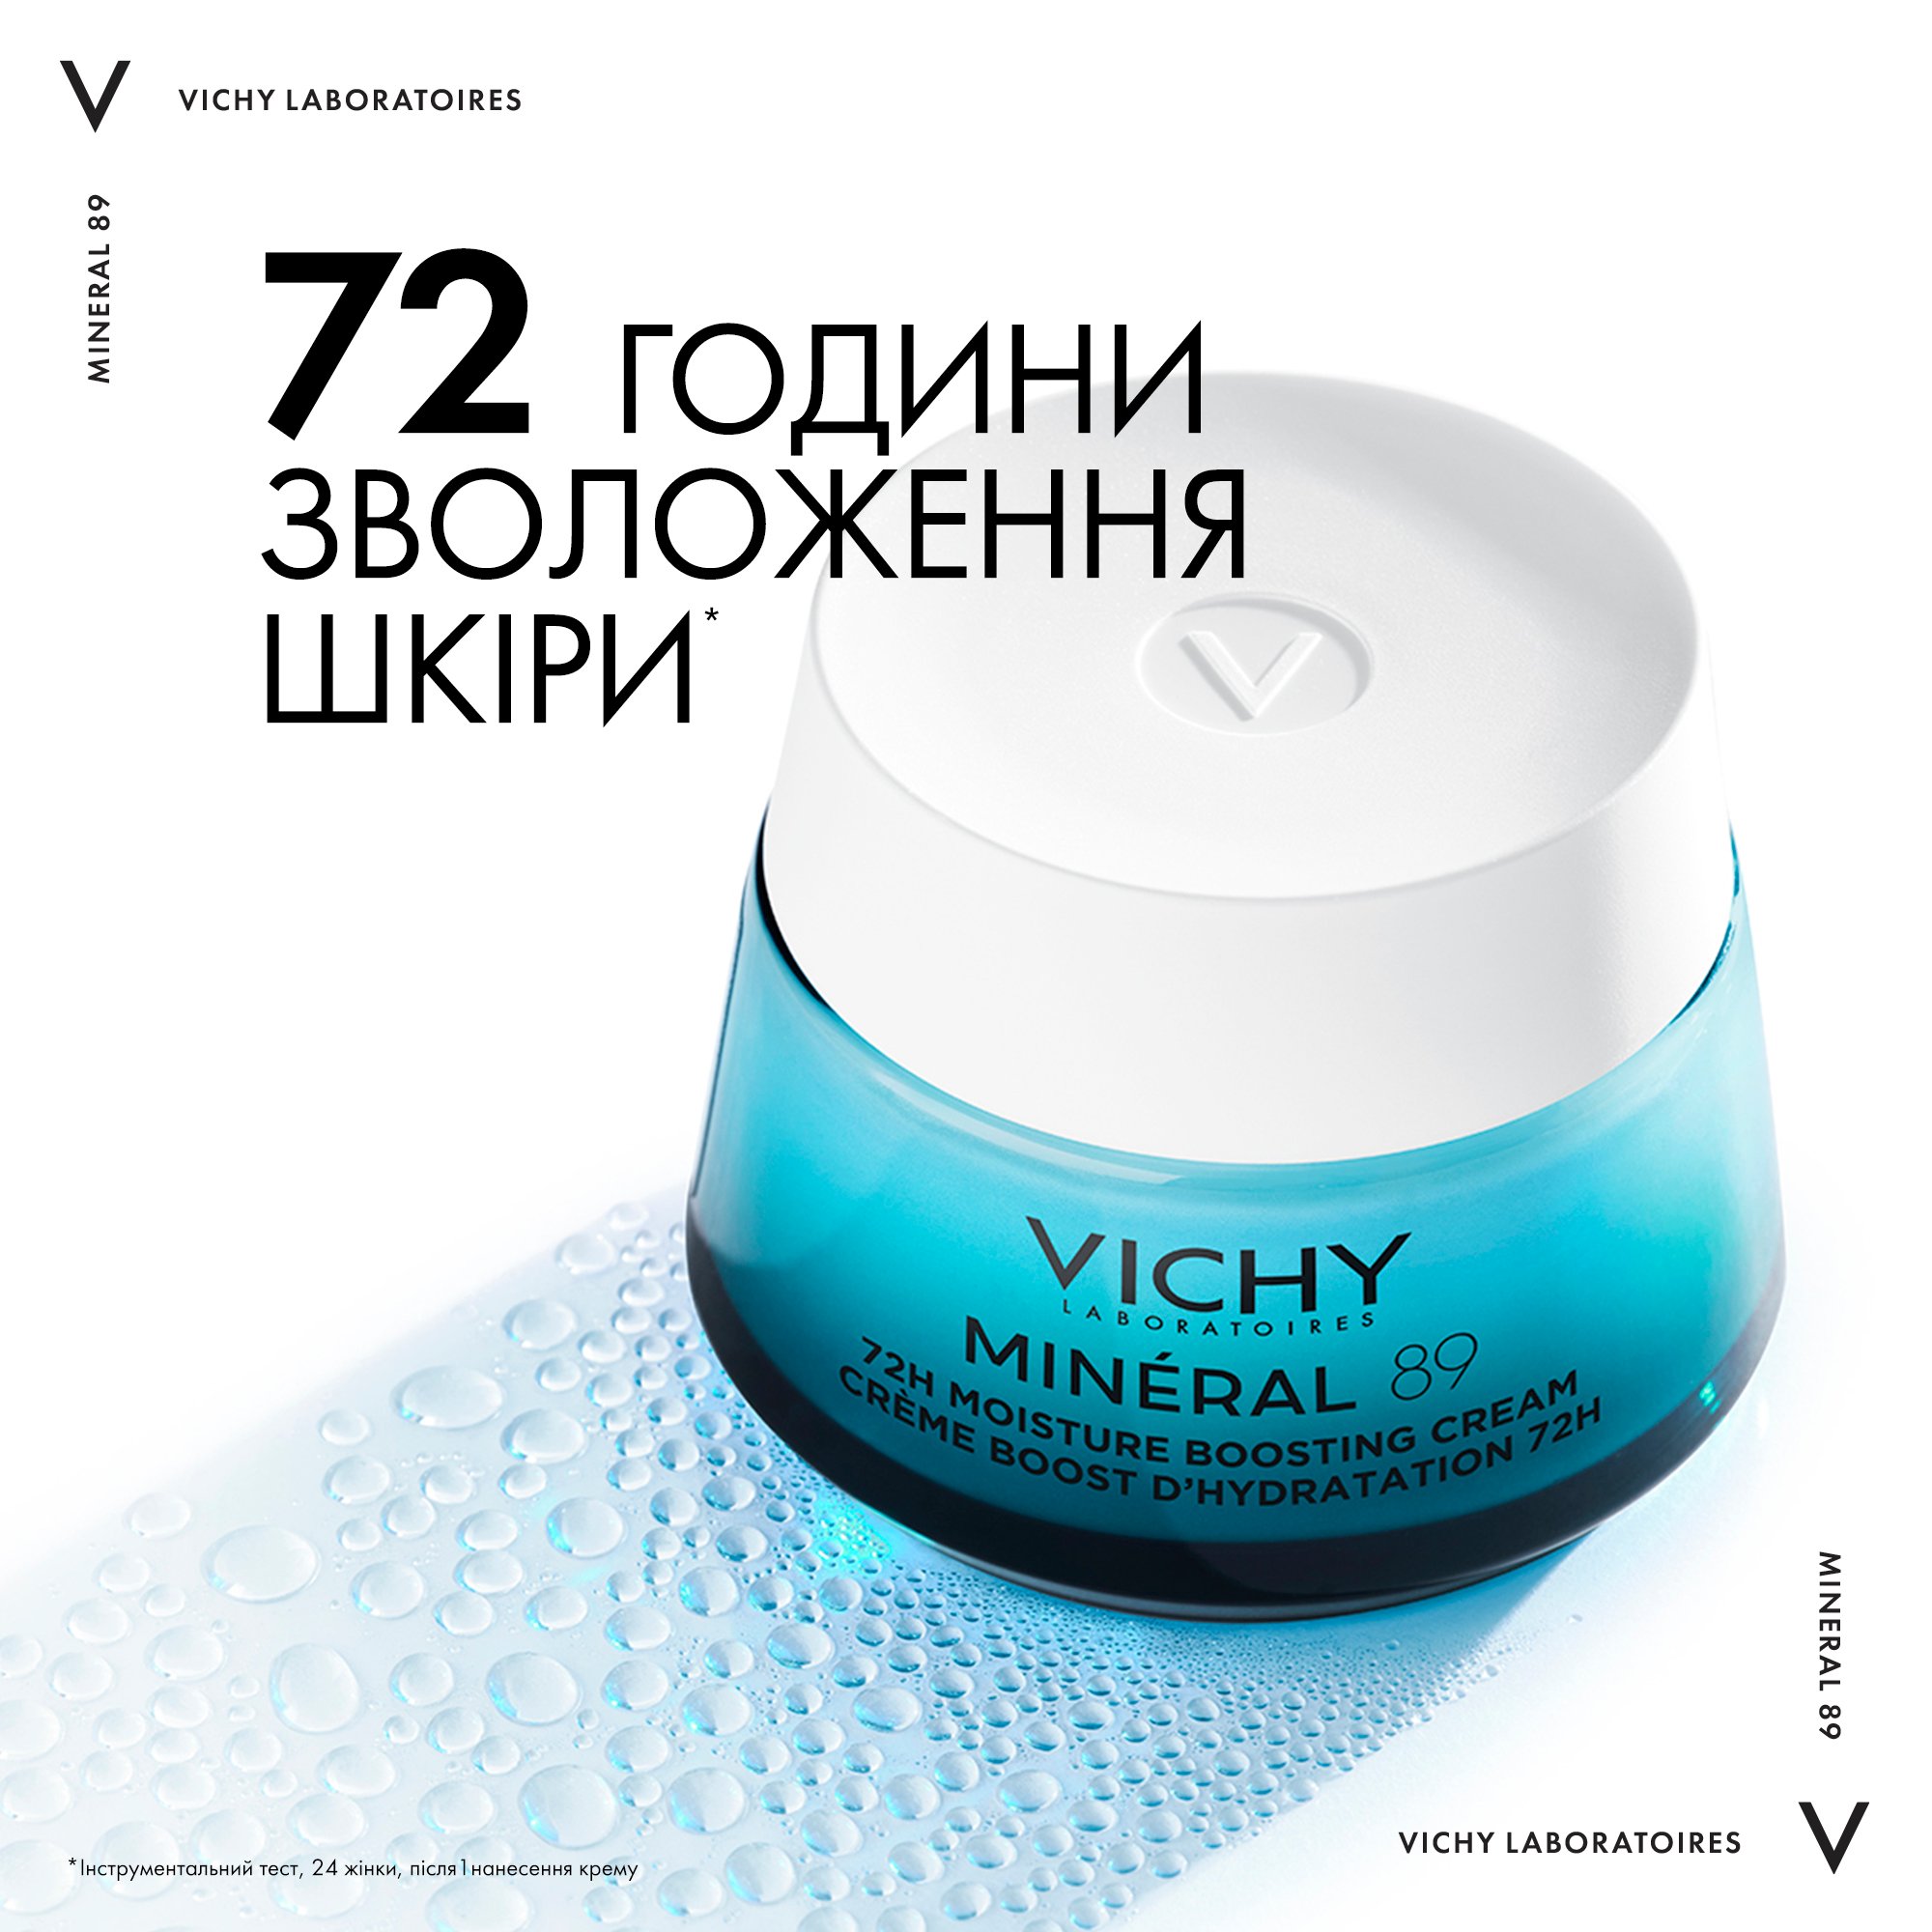 Насичений крем для сухої шкіри Vichy Mineral 89 Rich 72H Moisture Boosting Cream, 50 мл - фото 3